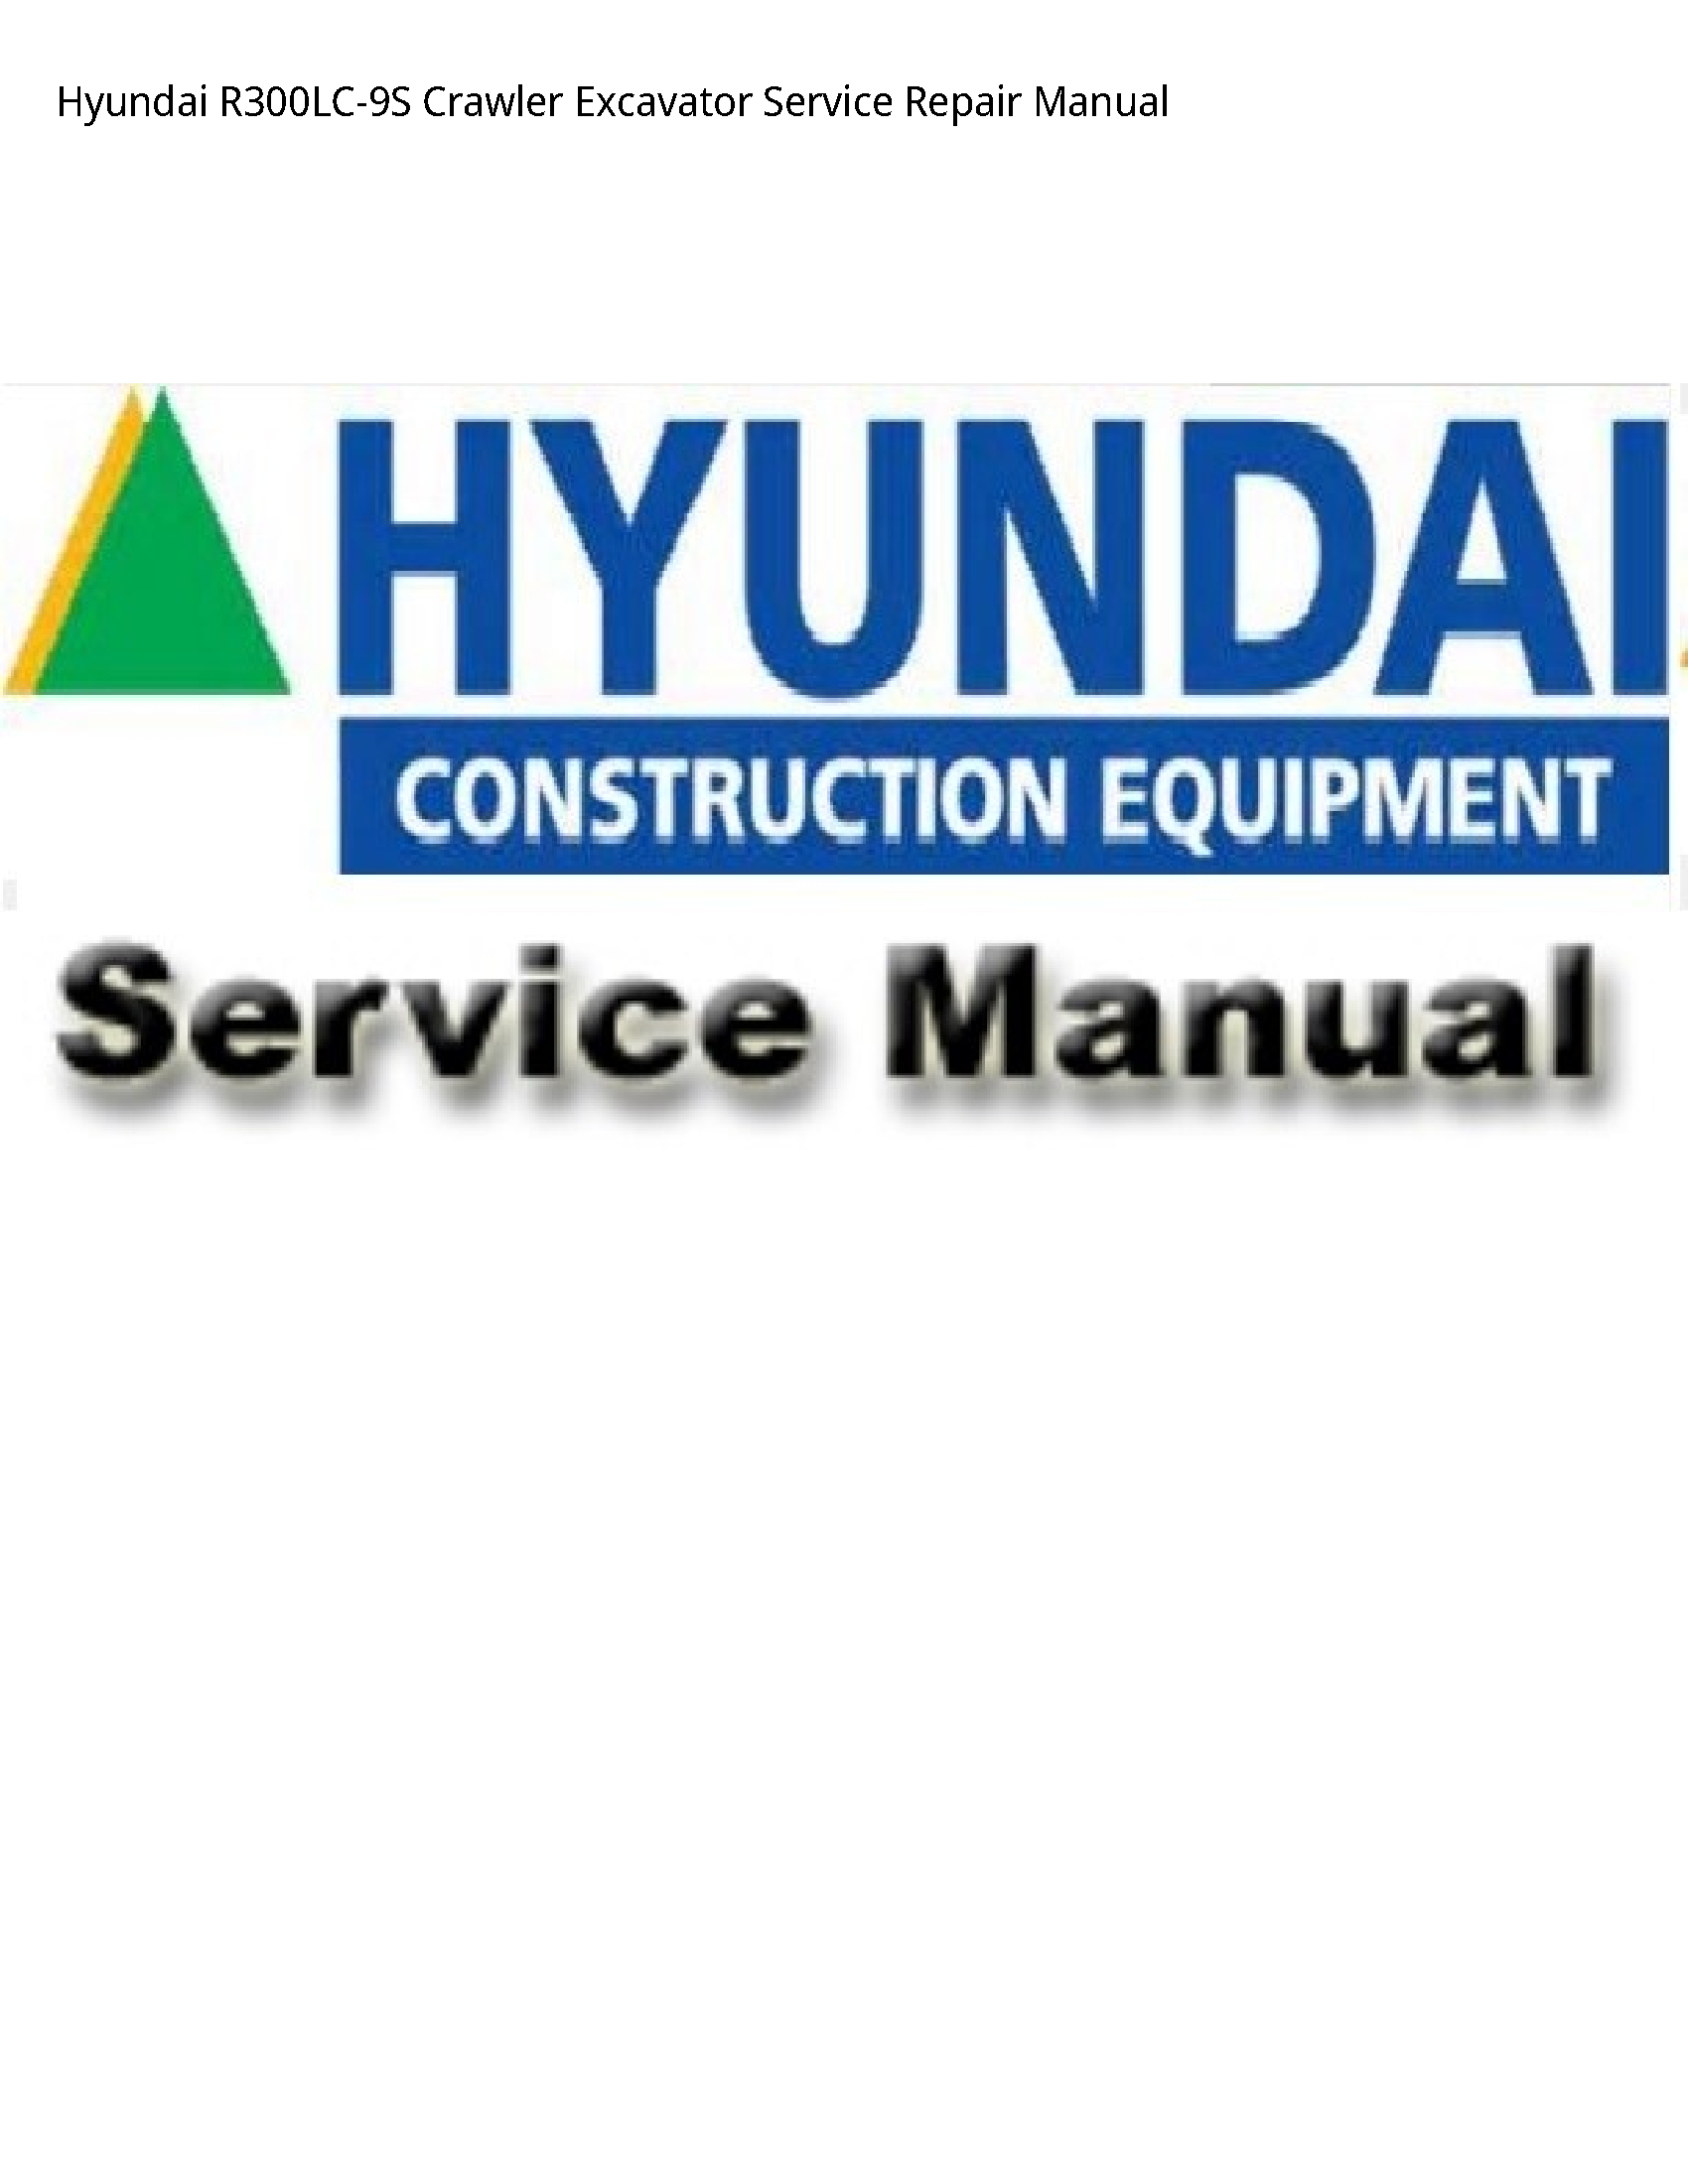 Hyundai R300LC-9S Crawler Excavator manual